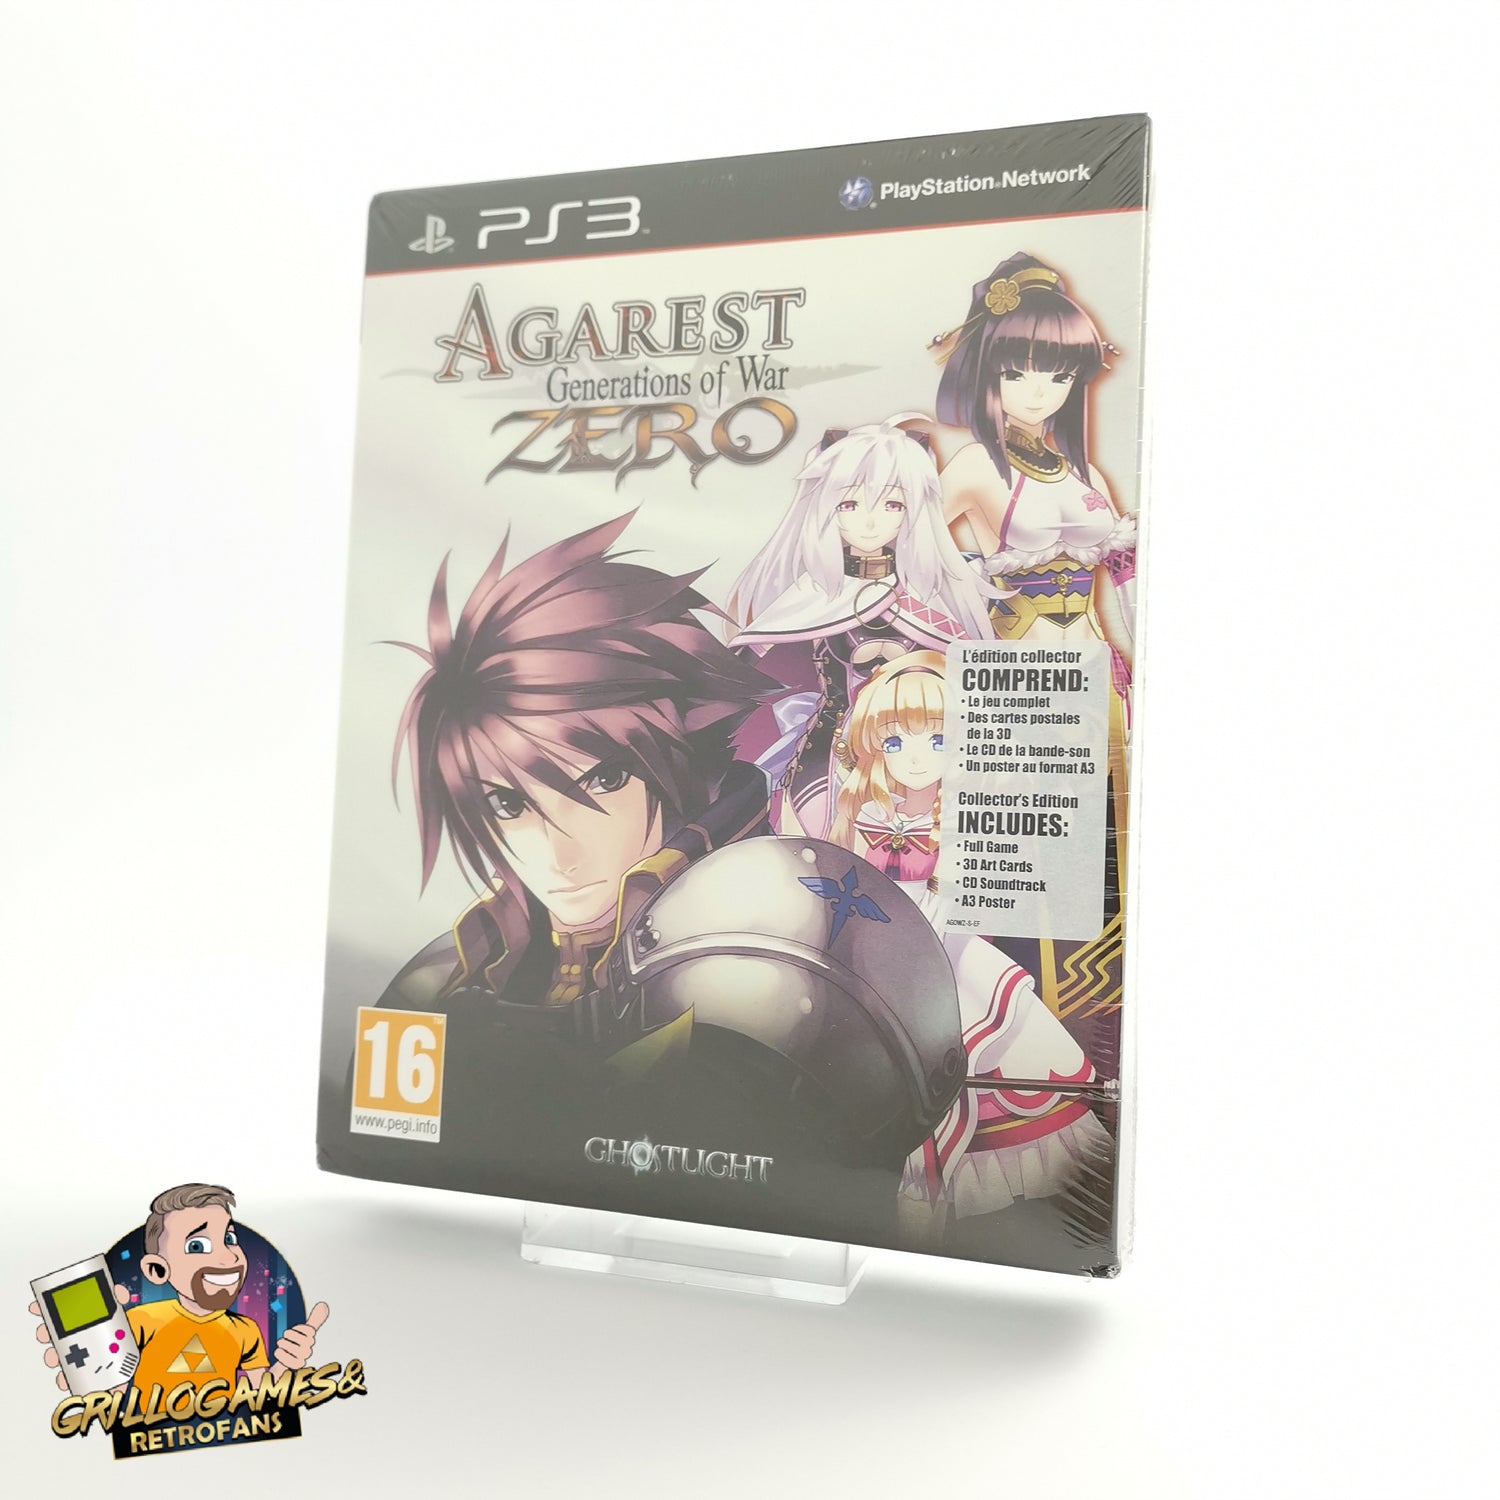 Sony Playstation 3 Spiel Agarest Generations of War Zero Collectors Edition PS3